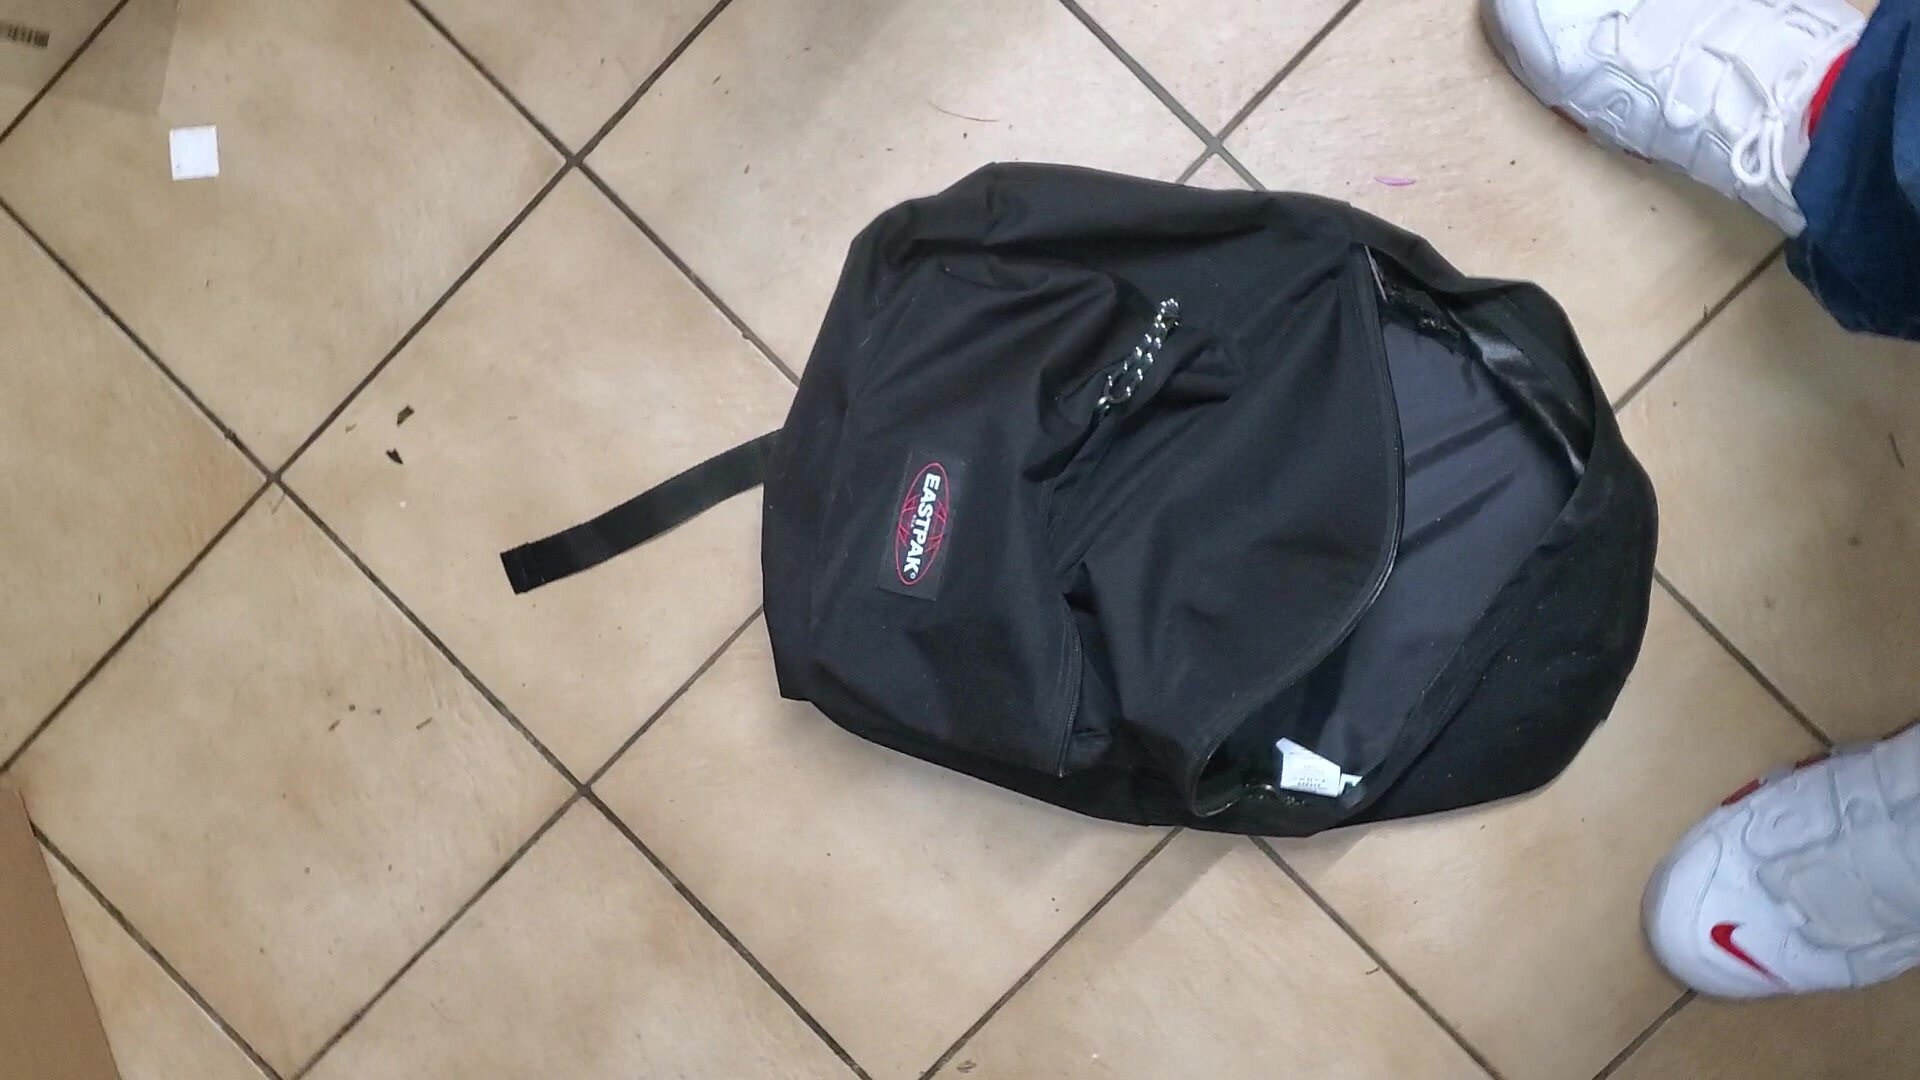 Piss eastpack backpack - video 2